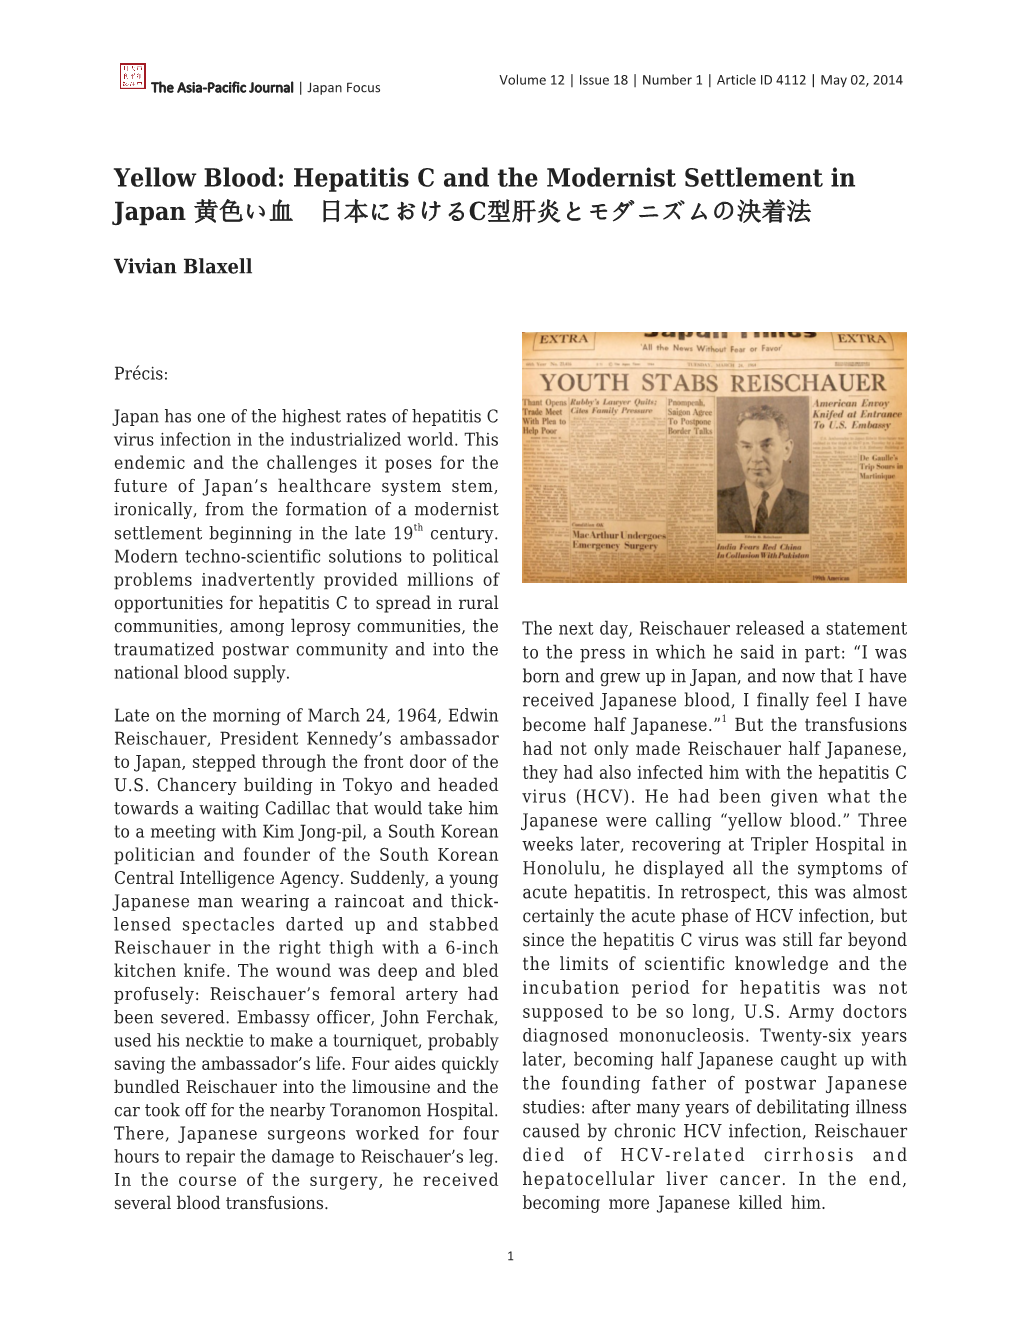 Yellow Blood: Hepatitis C and the Modernist Settlement in Japan 黄色い血 日本におけるC型肝炎とモダニズムの決着法